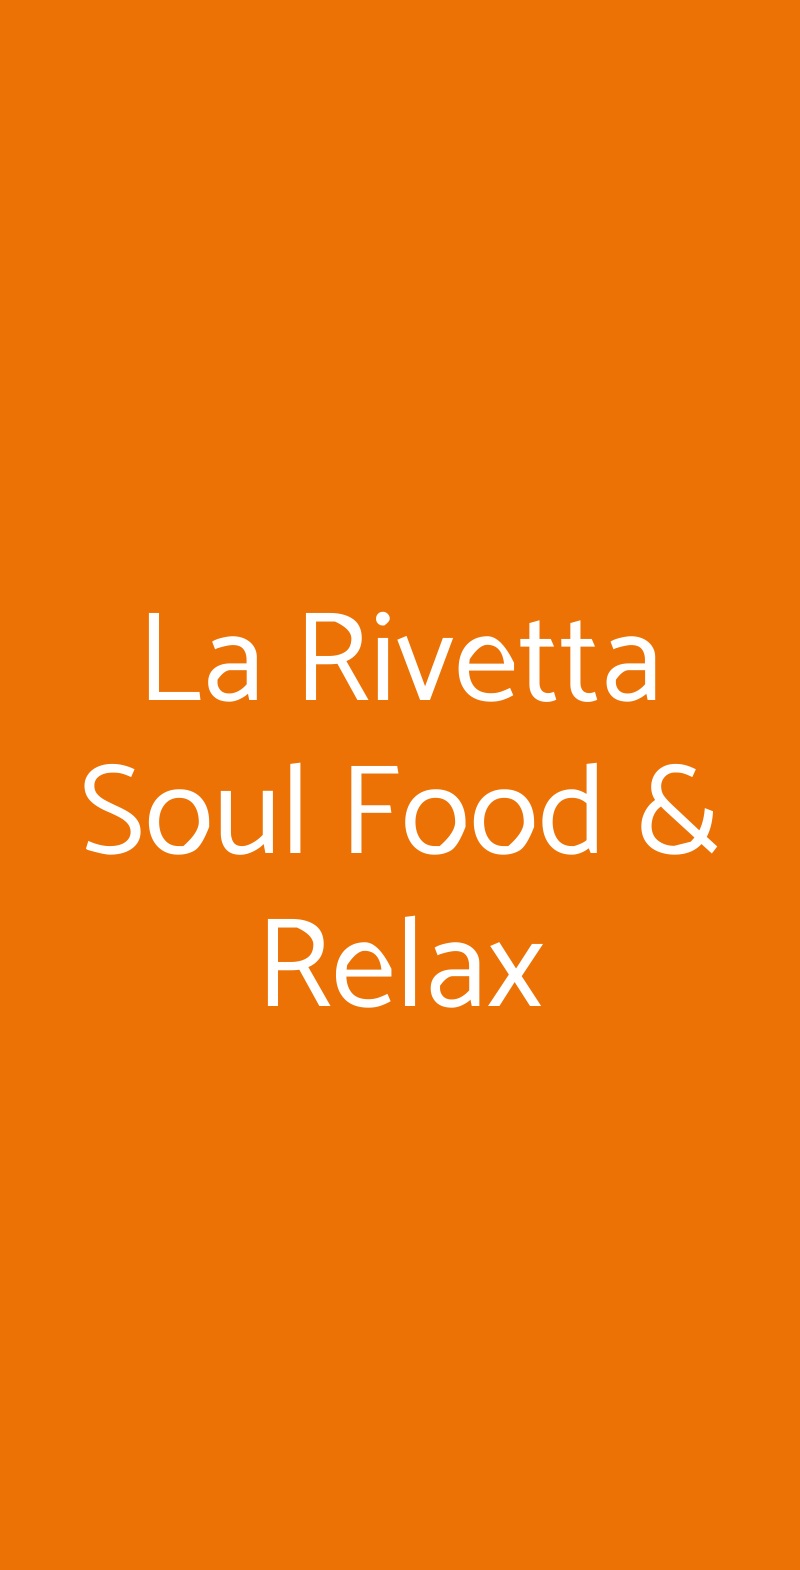 La Rivetta Soul Food & Relax Fiumicino menù 1 pagina